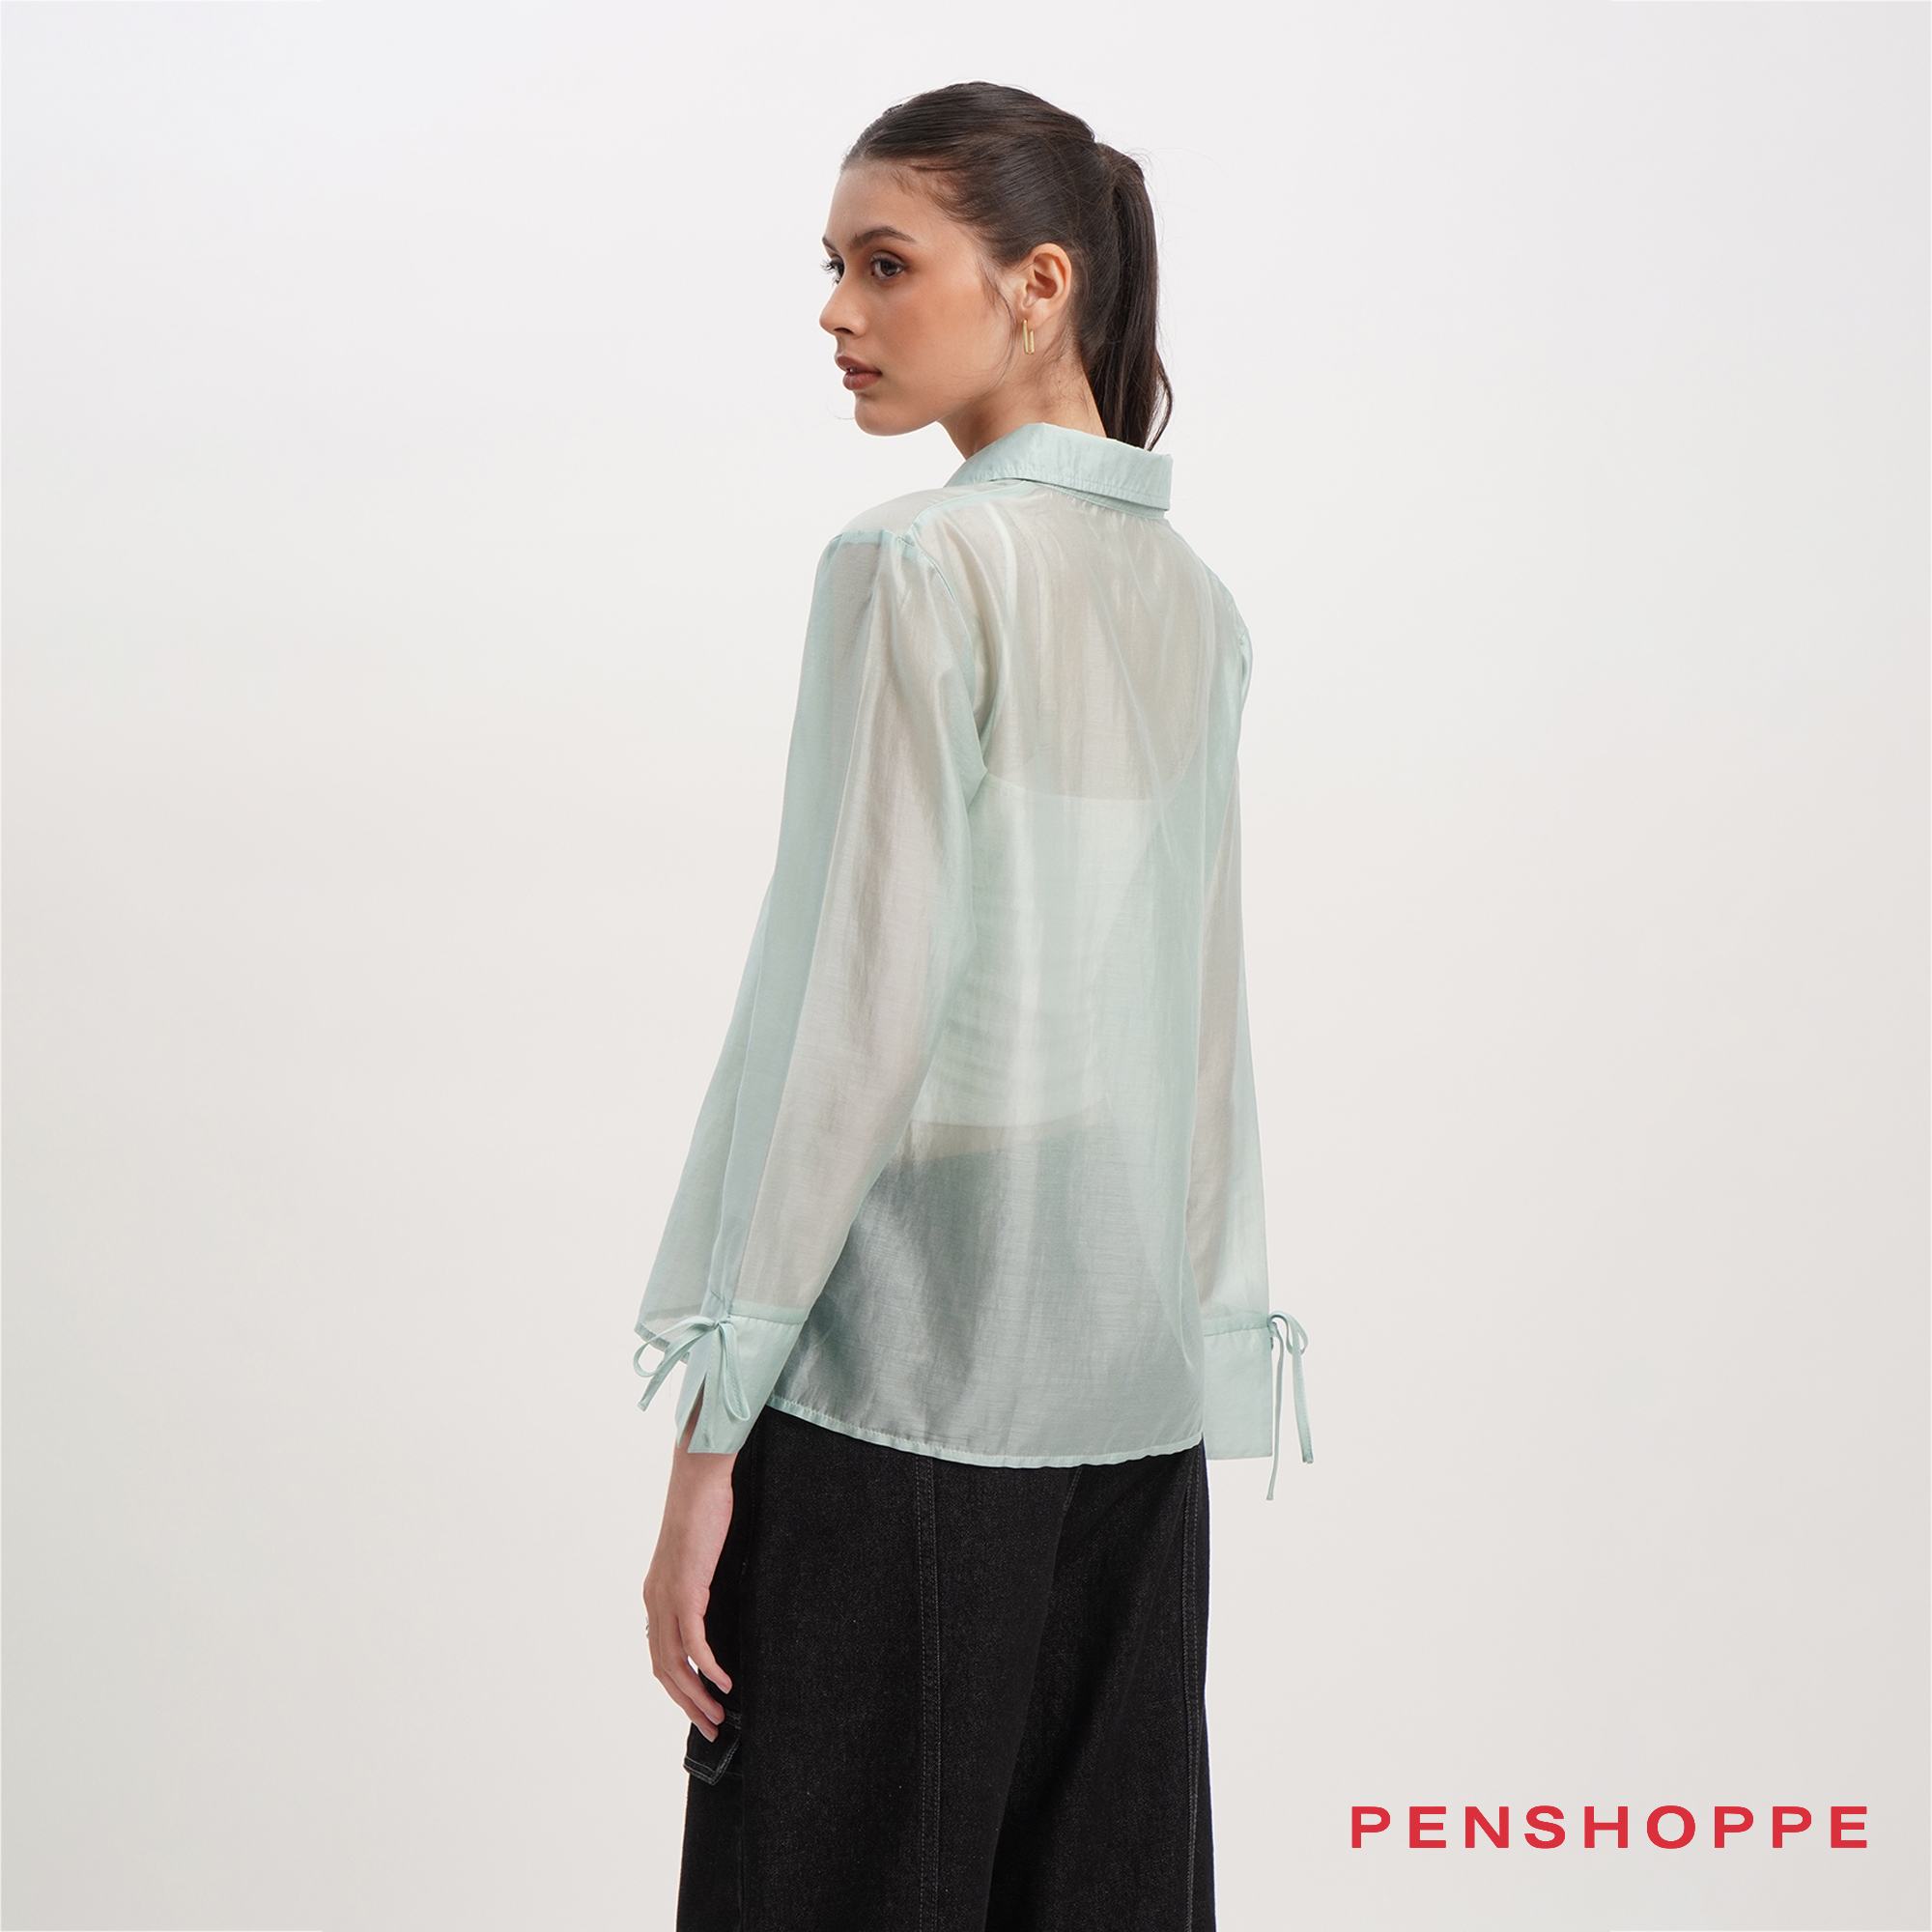 Penshoppe Relaxed Fit Sheer Top With Inner For Women (Black/White)